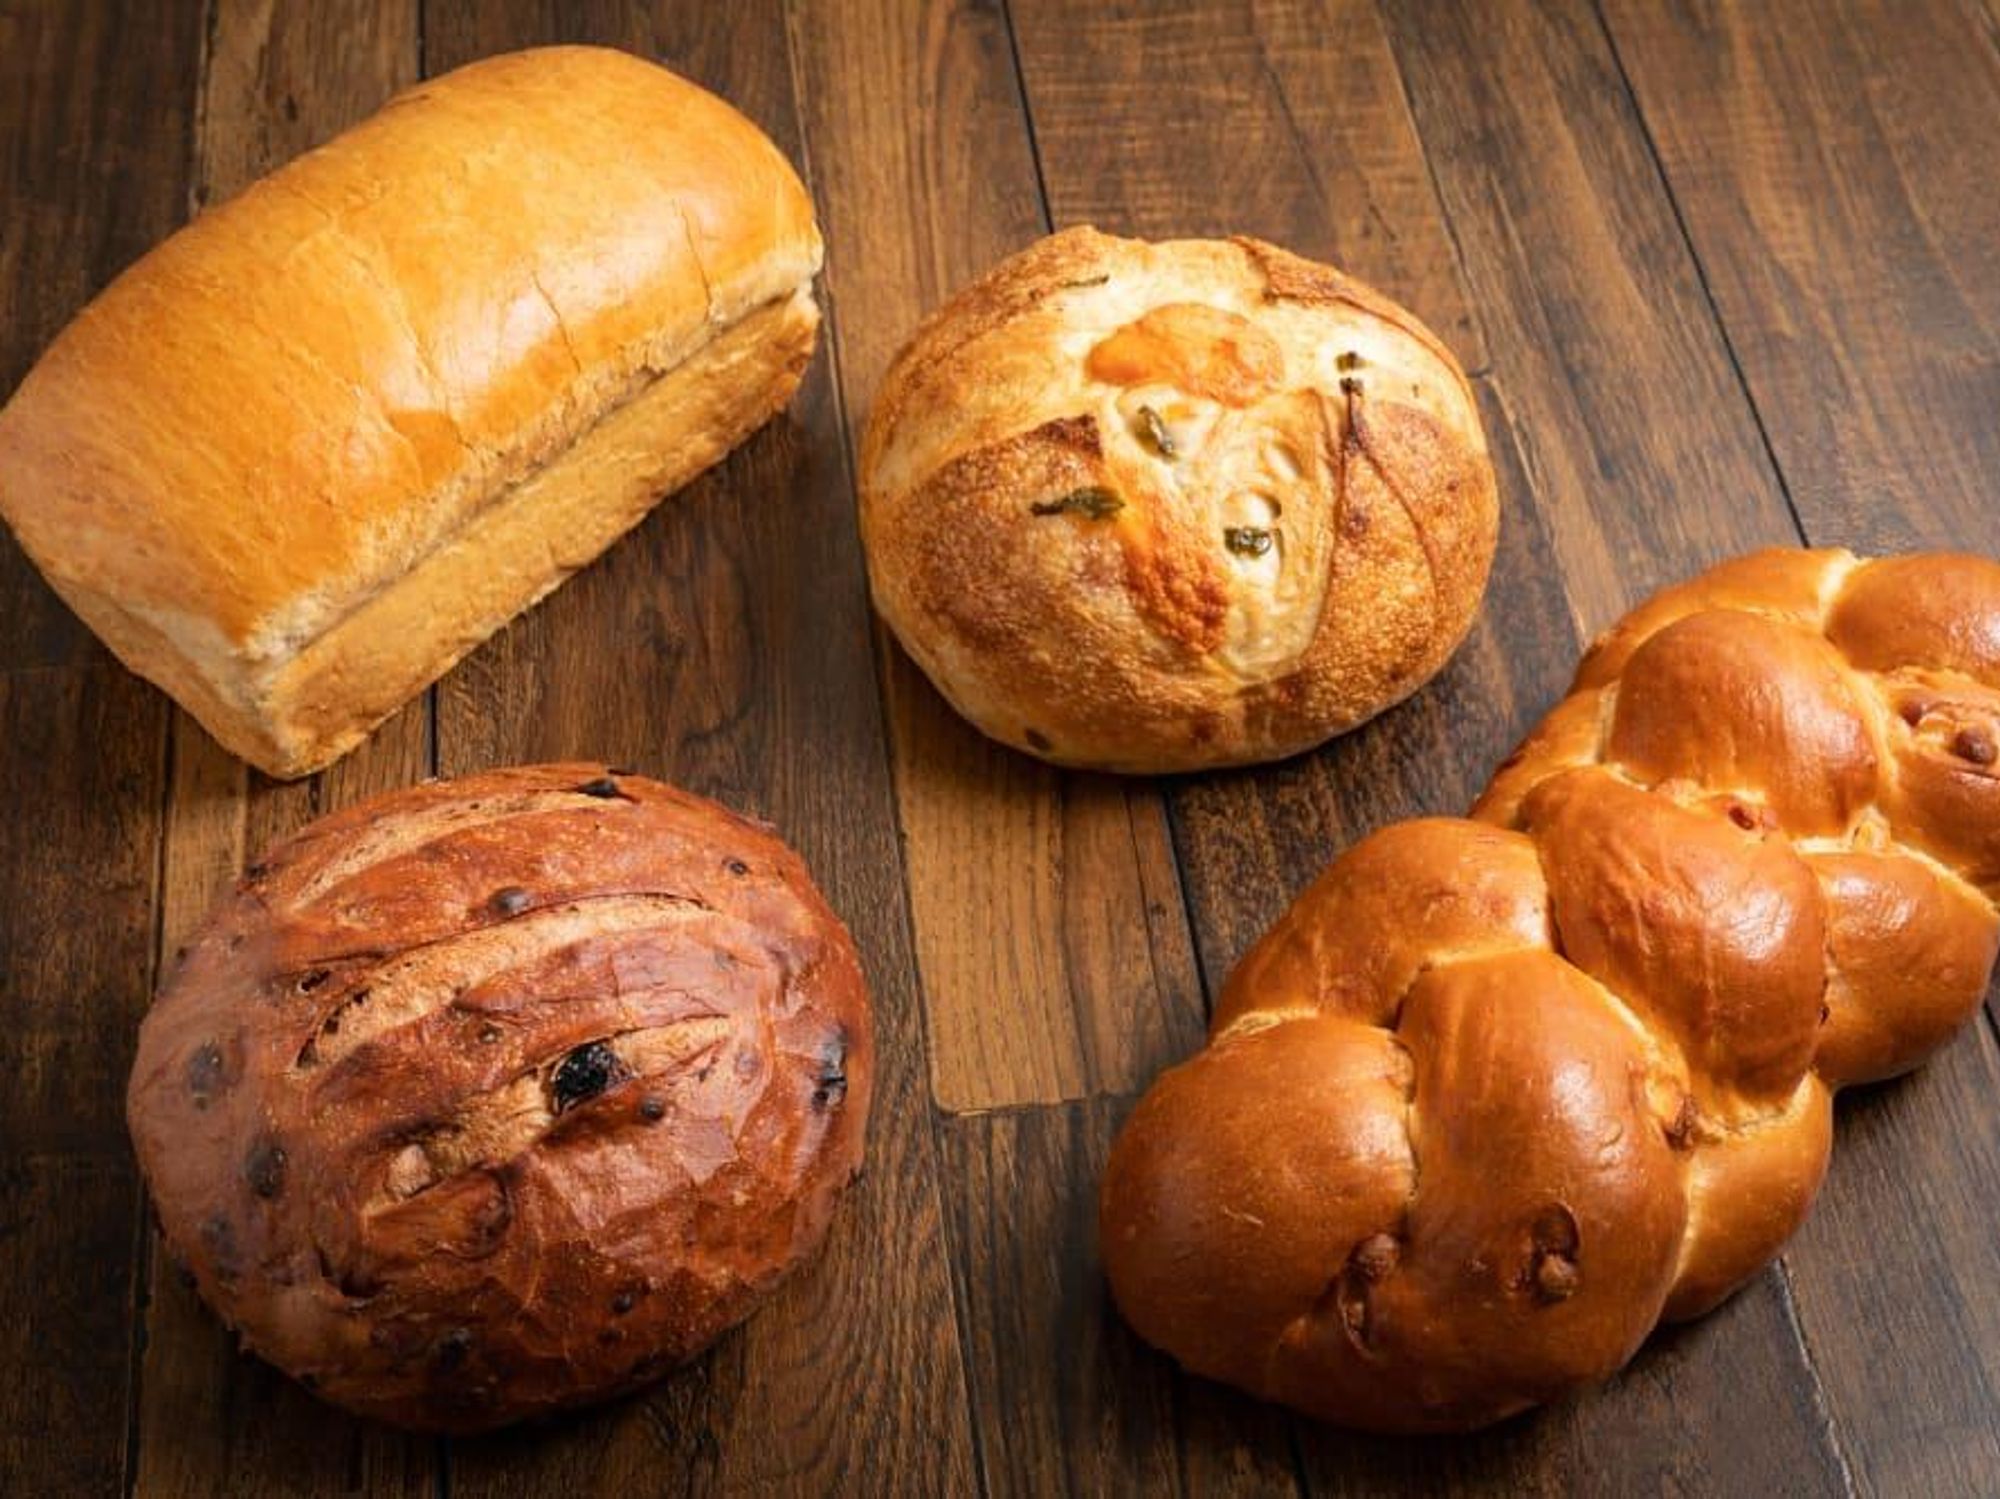 Bread Man Baking Company Whole Foods breads